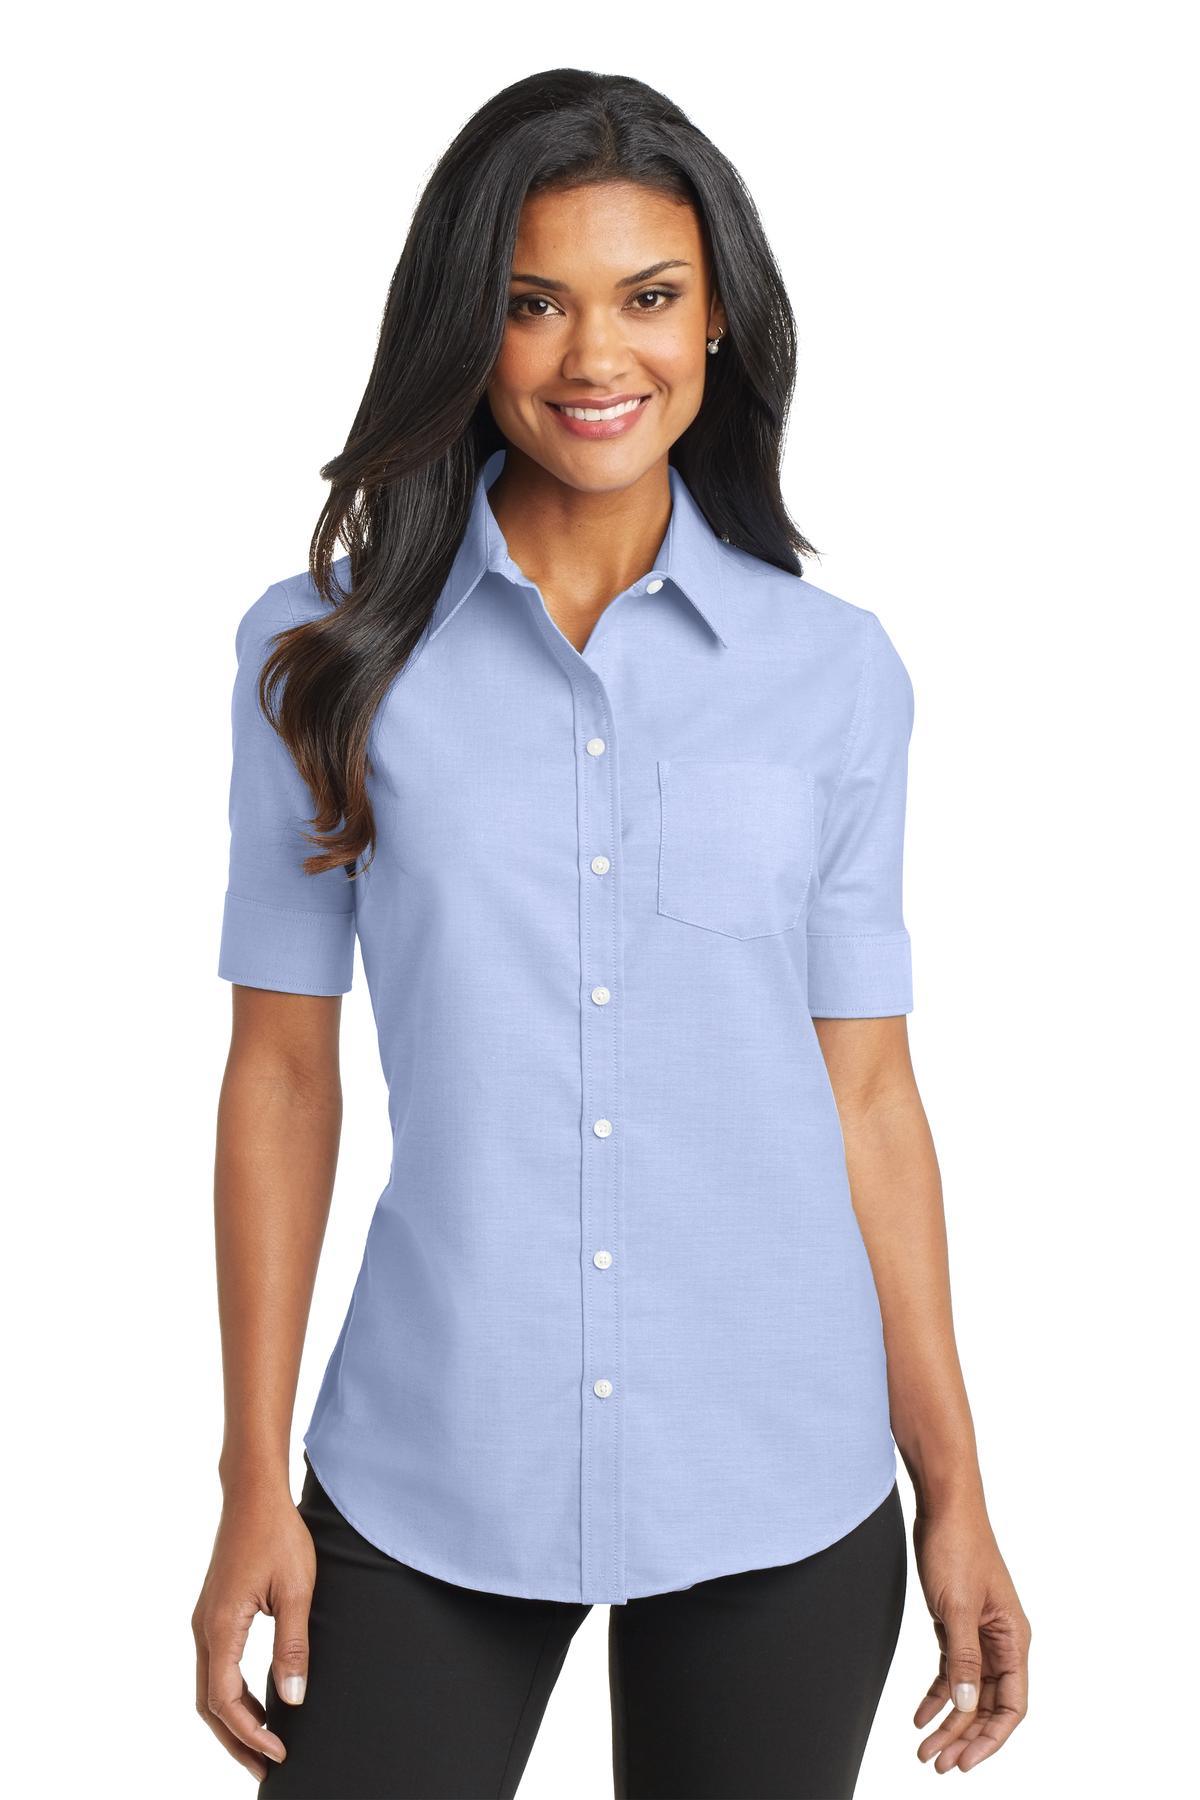 Port Authority Ladies Short Sleeve SuperPro Oxford Shirt. L659 - Dresses Max